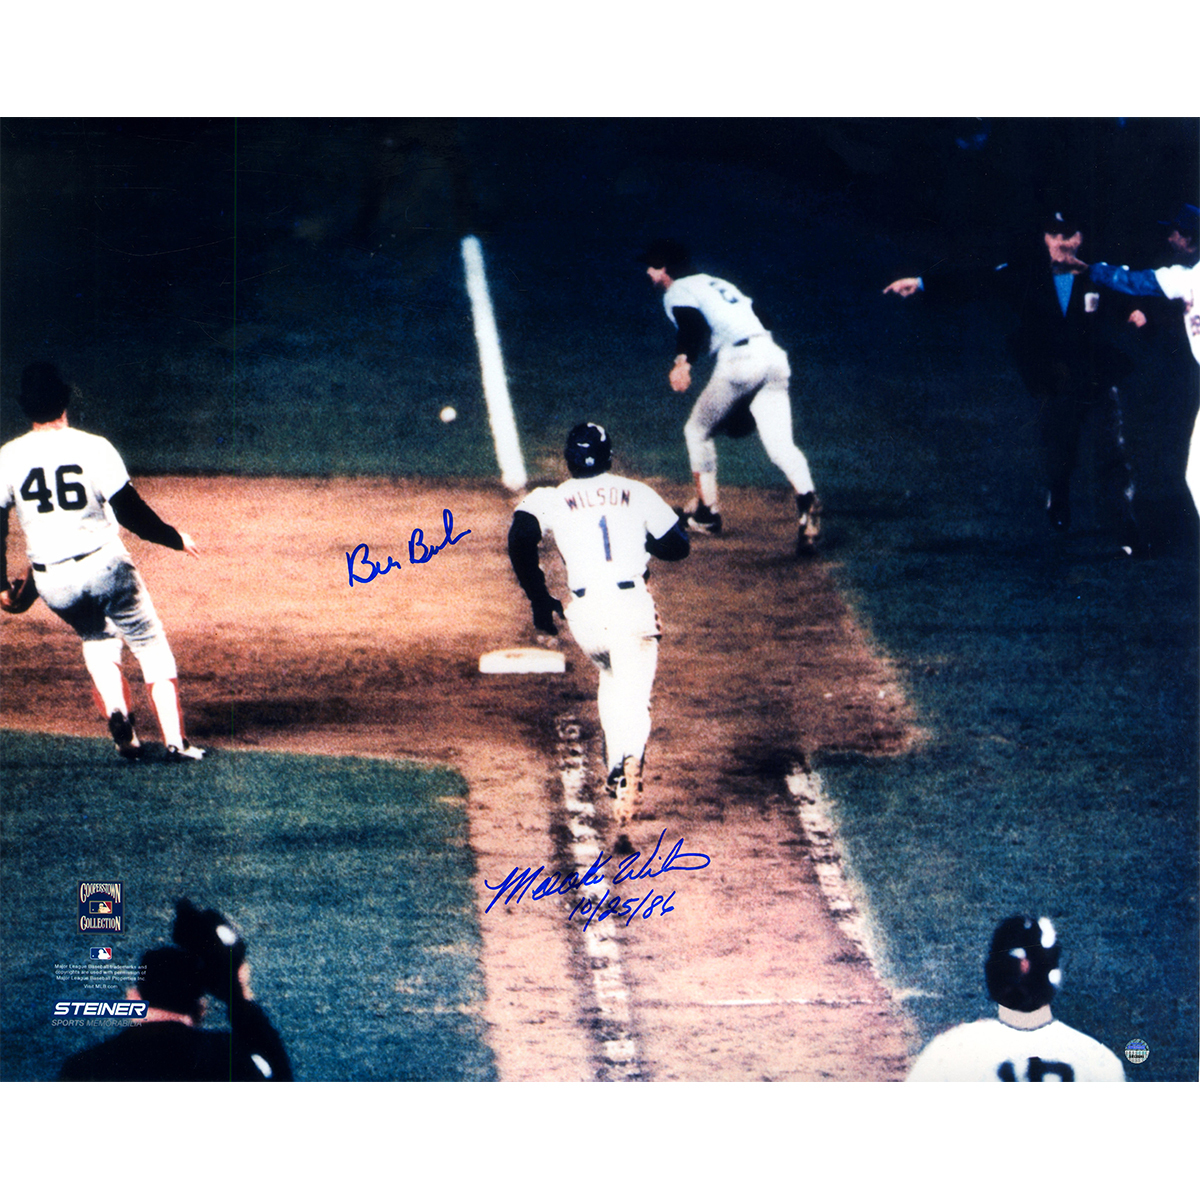 Bill Buckner/Mookie Wilson 1986 World Series Game 6 Dual-Signed